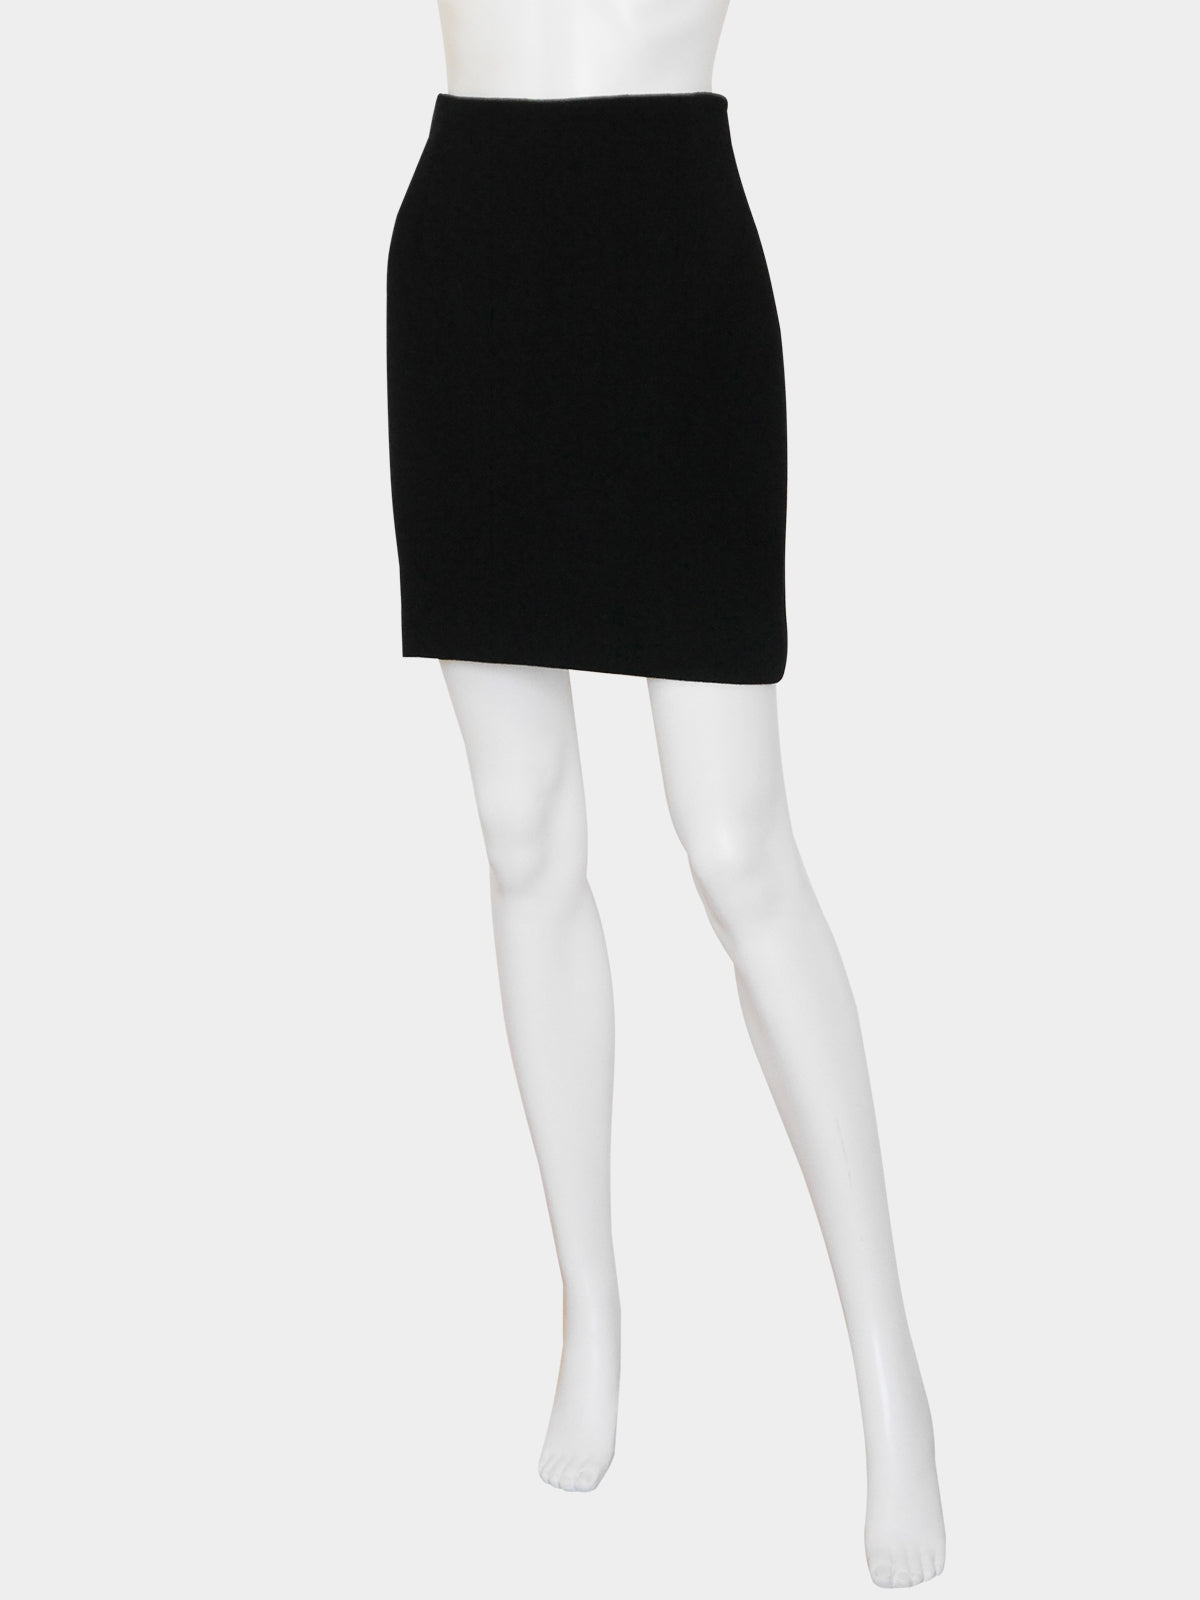 GIANNI VERSACE Couture Fall 1994 Vintage Black & Leopard Skirt Suit Size XS